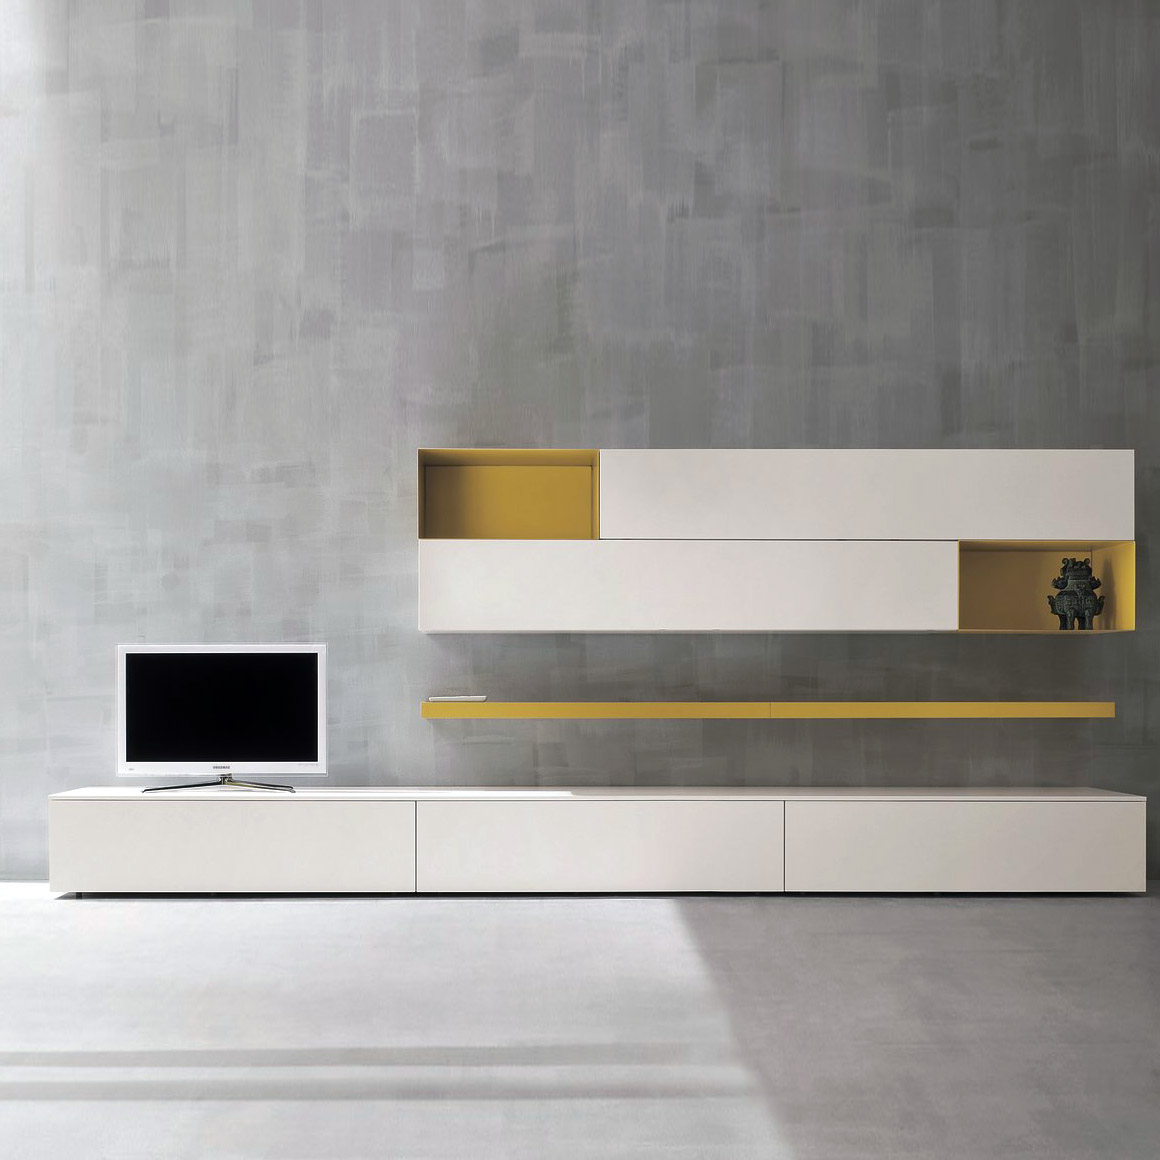 dall-agnese-tv-unit-stright-lines-minimalist-design-white-colour.jpg